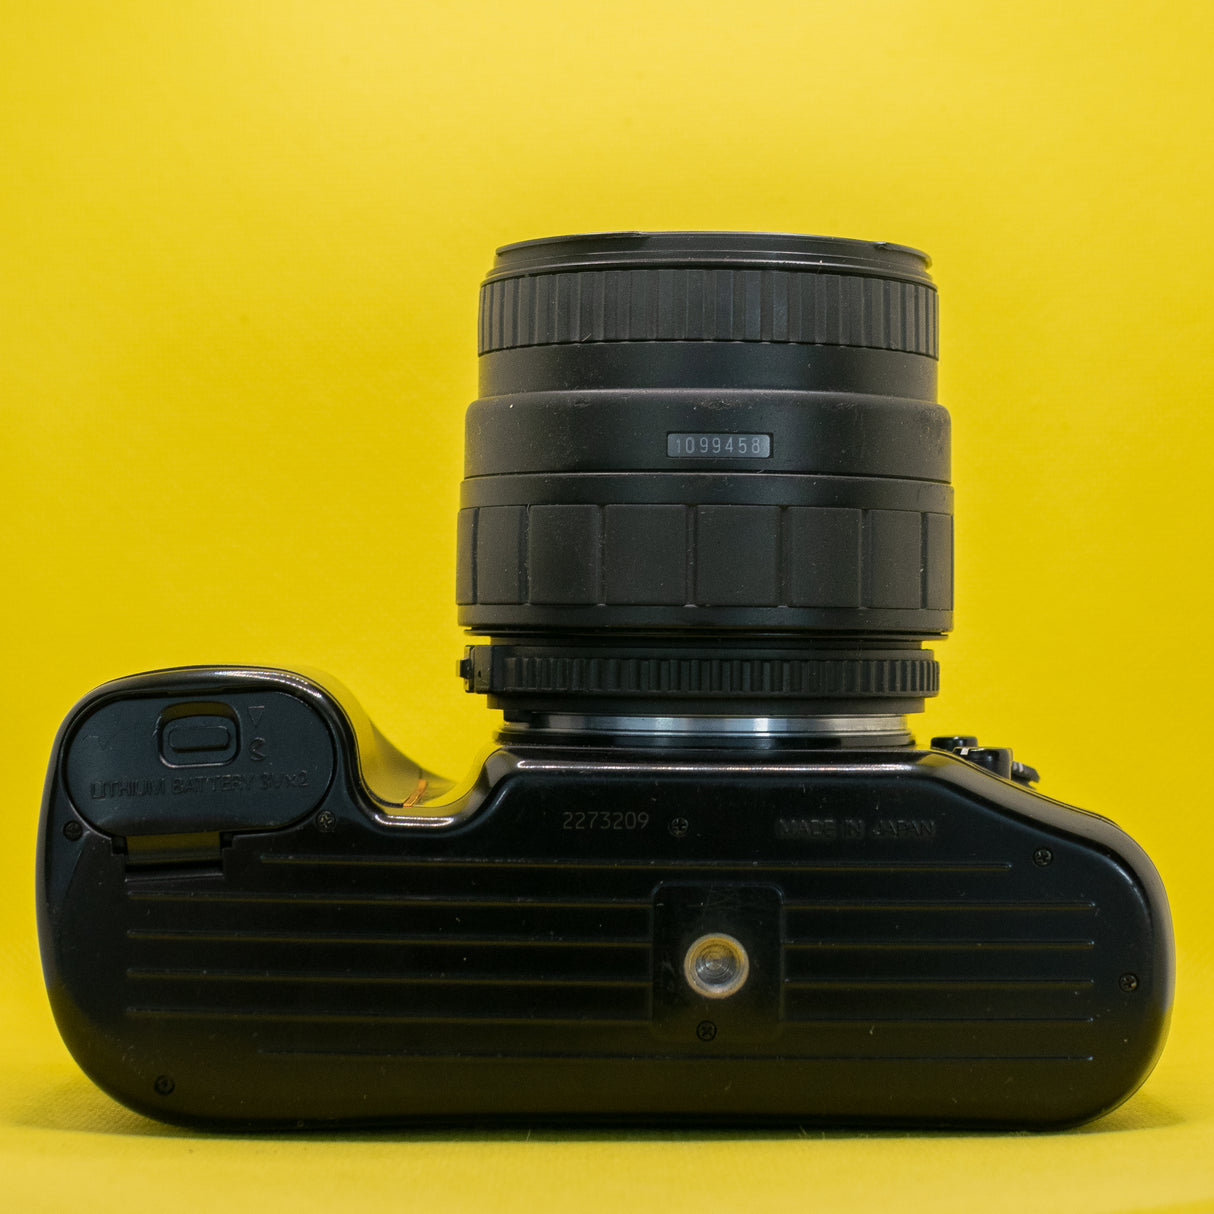 Nikon F70 - 35mm SLR Film Camera